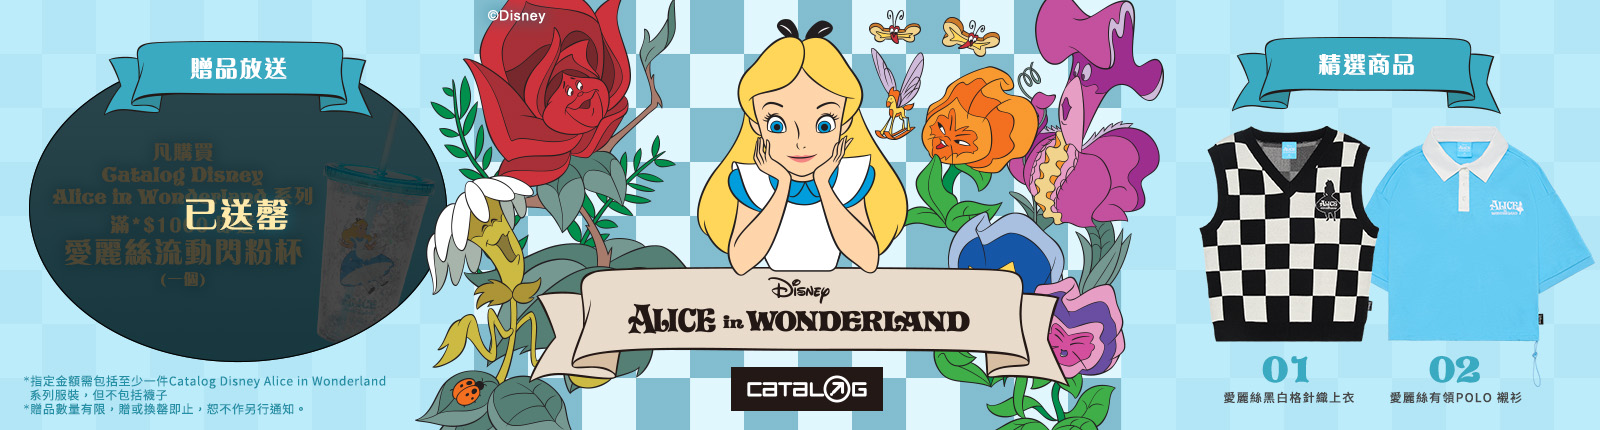 Catalog Disney Alice in Wonderland系列